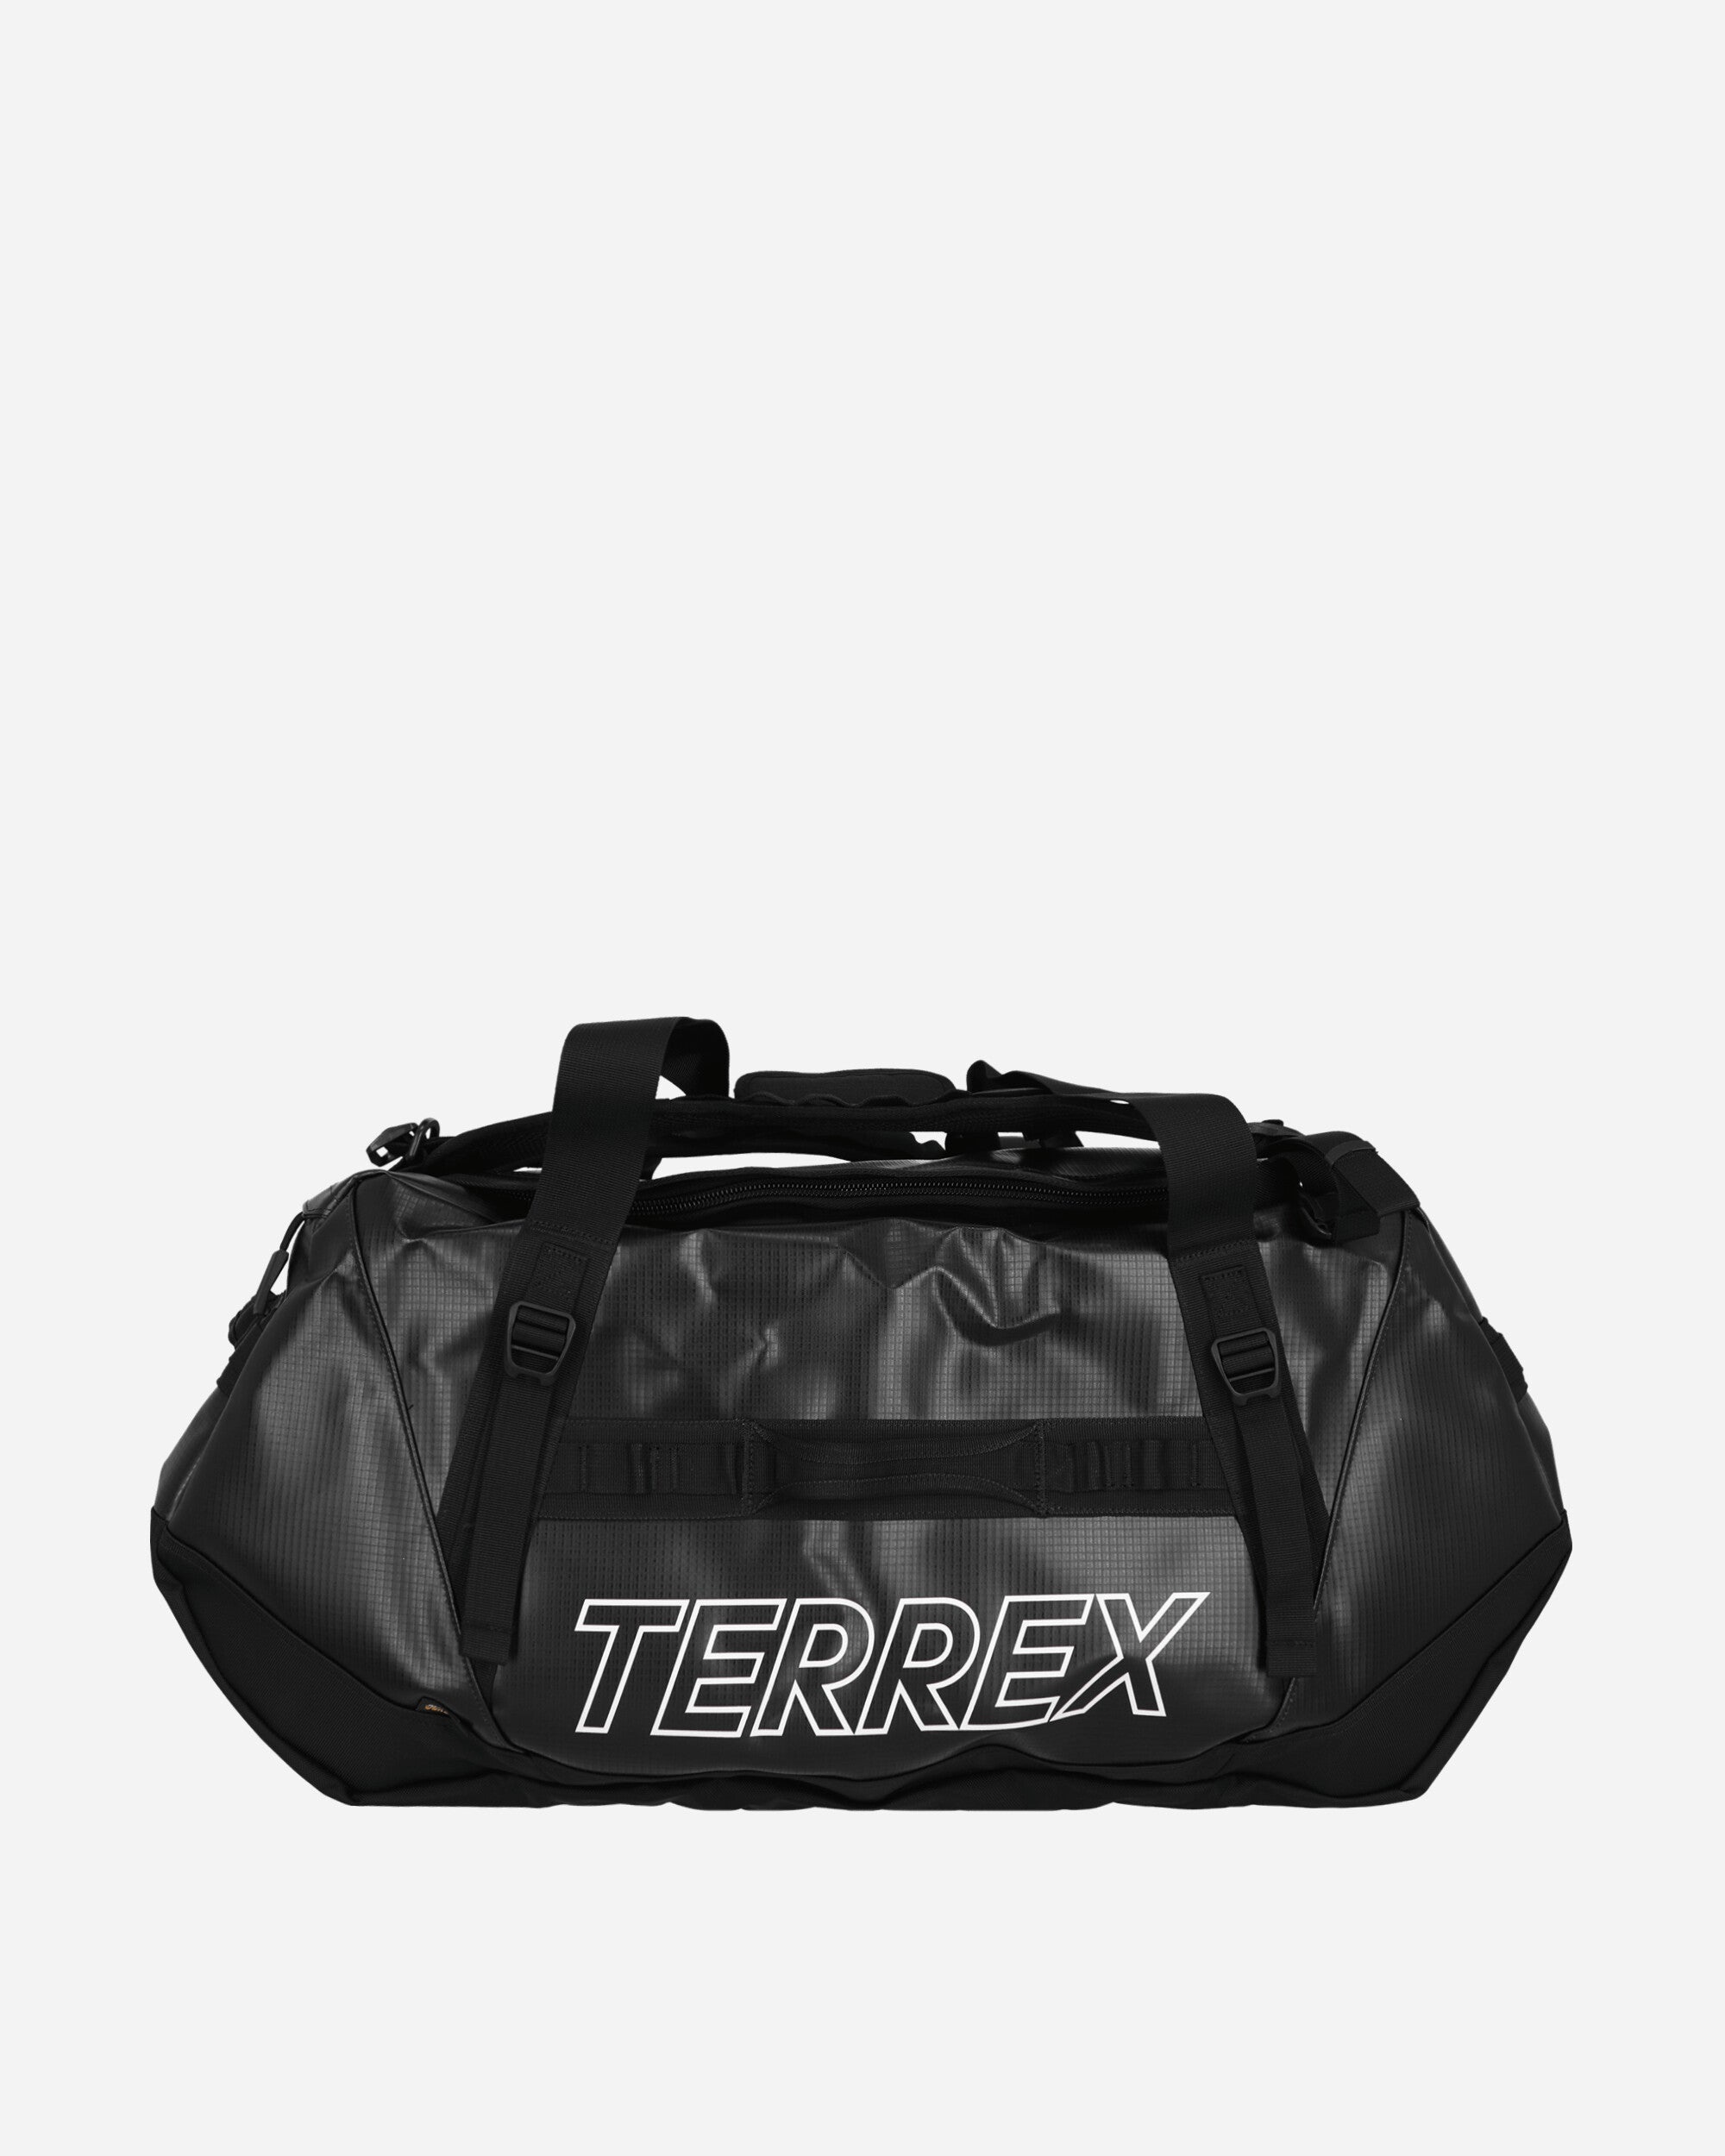 TERREX Expedition Duffel Bag Large Black - 1